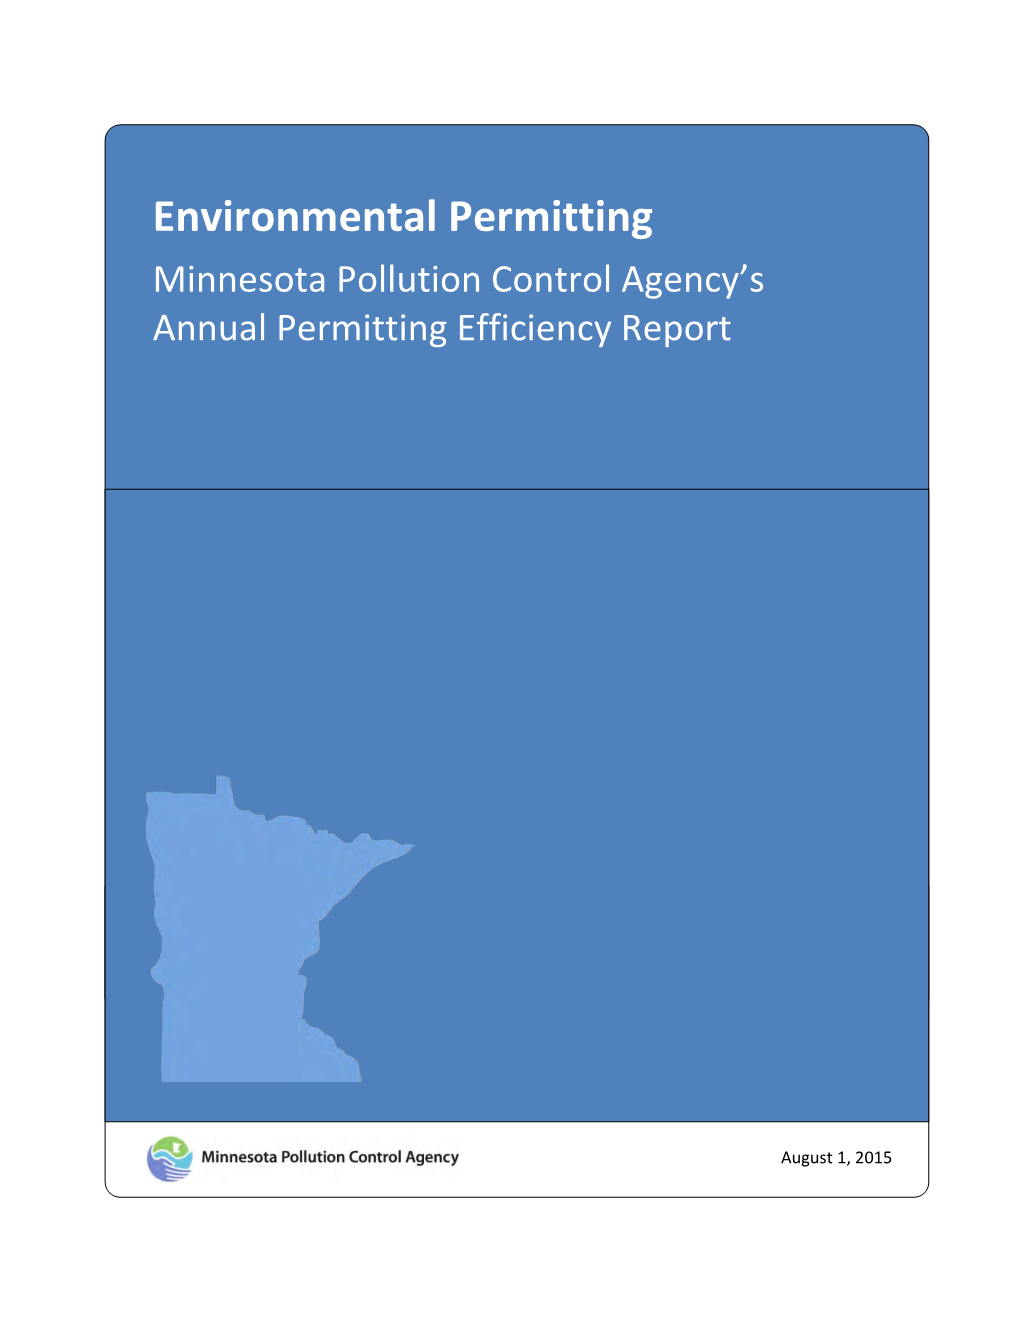 MPCA's Annual Environmental Permitting Efficiency Report